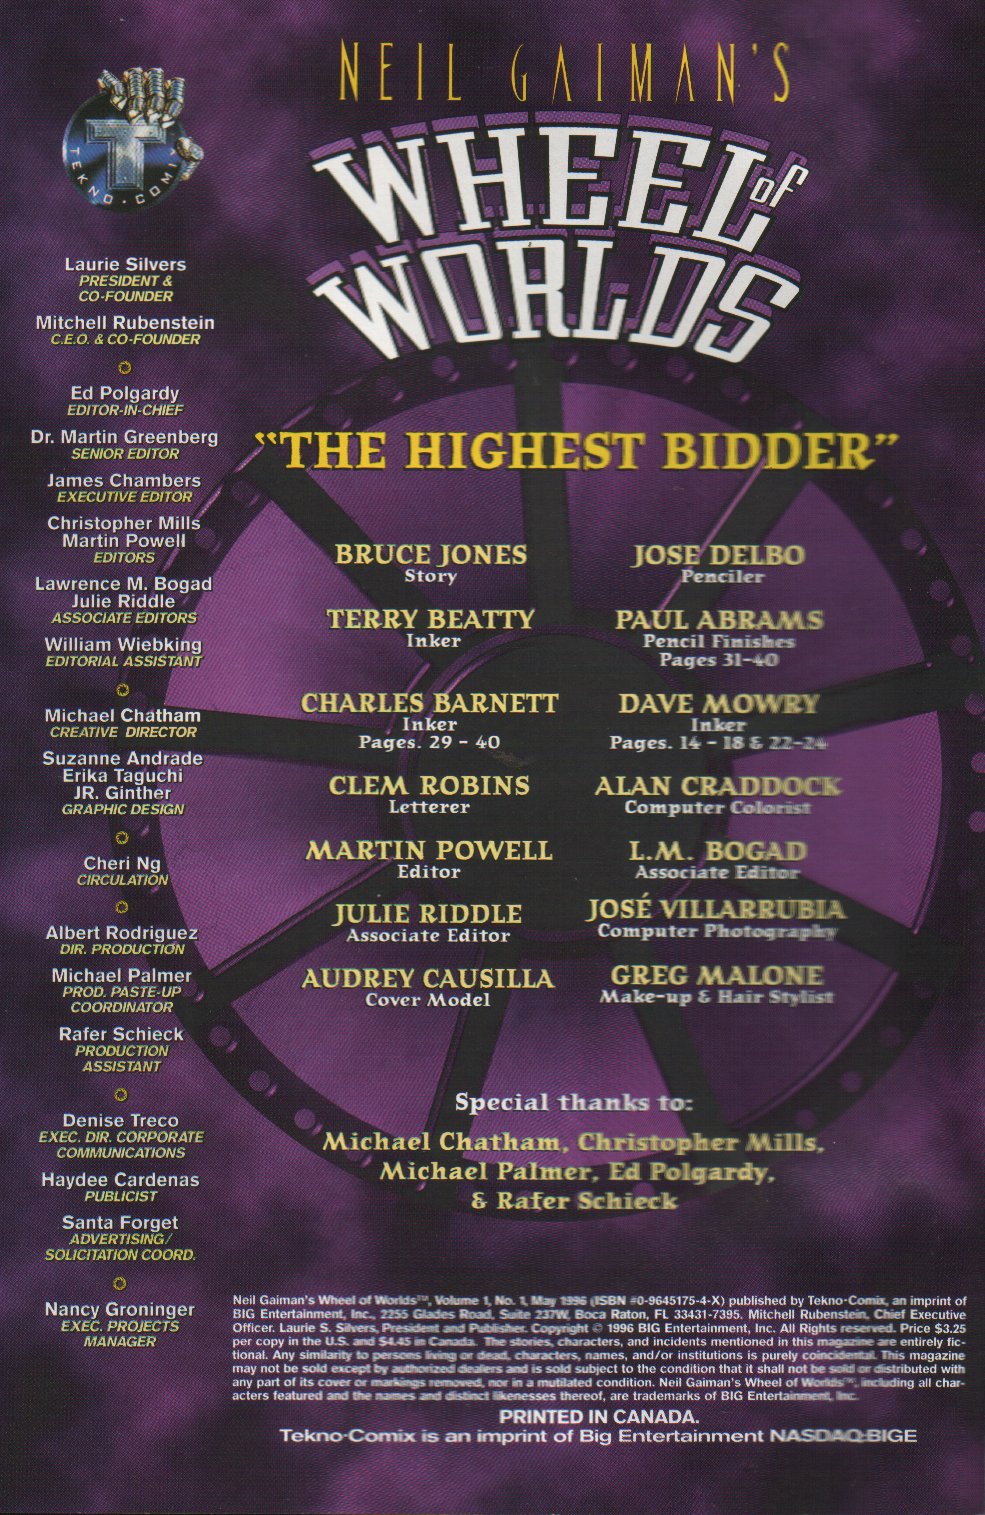 Read online Neil Gaiman's Wheel of Worlds comic -  Issue #1 - 2